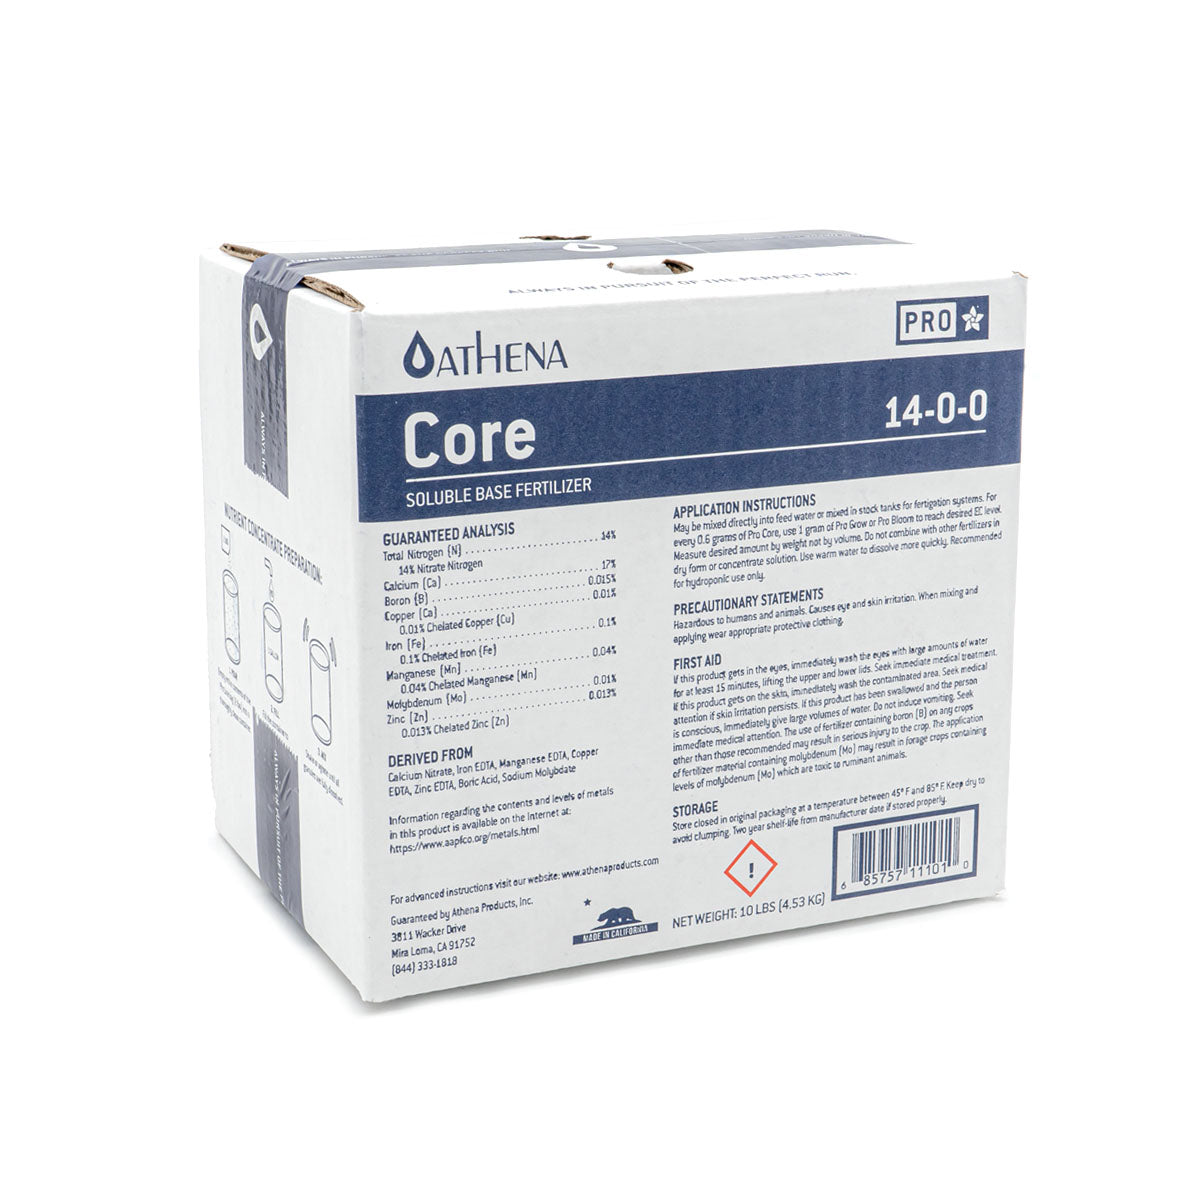 Athena Core Pro Line 2 pound powder nutrient